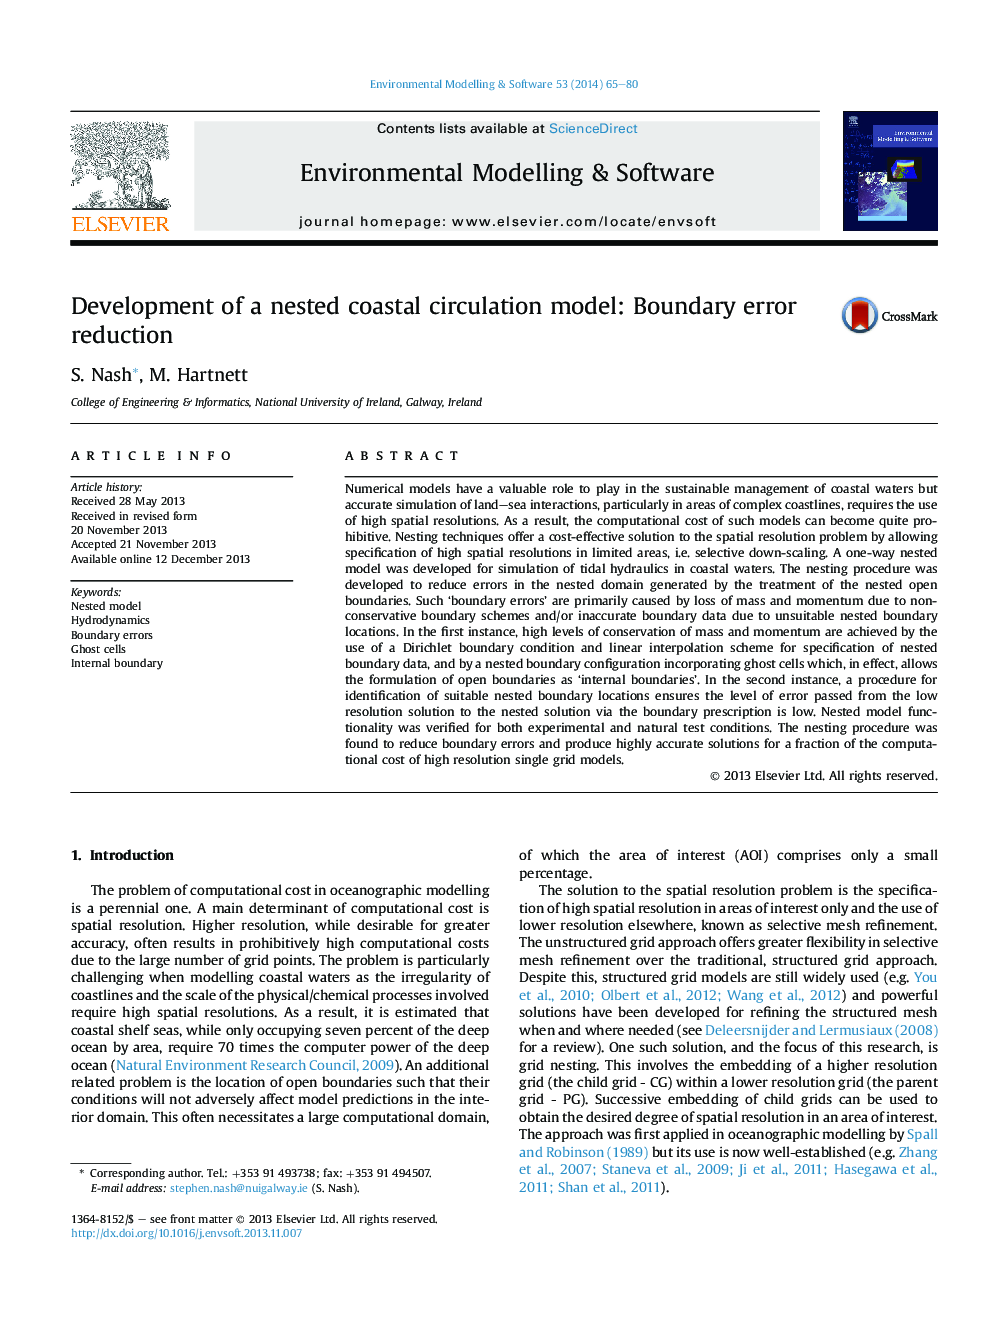 Development of a nested coastal circulation model: Boundary error reduction